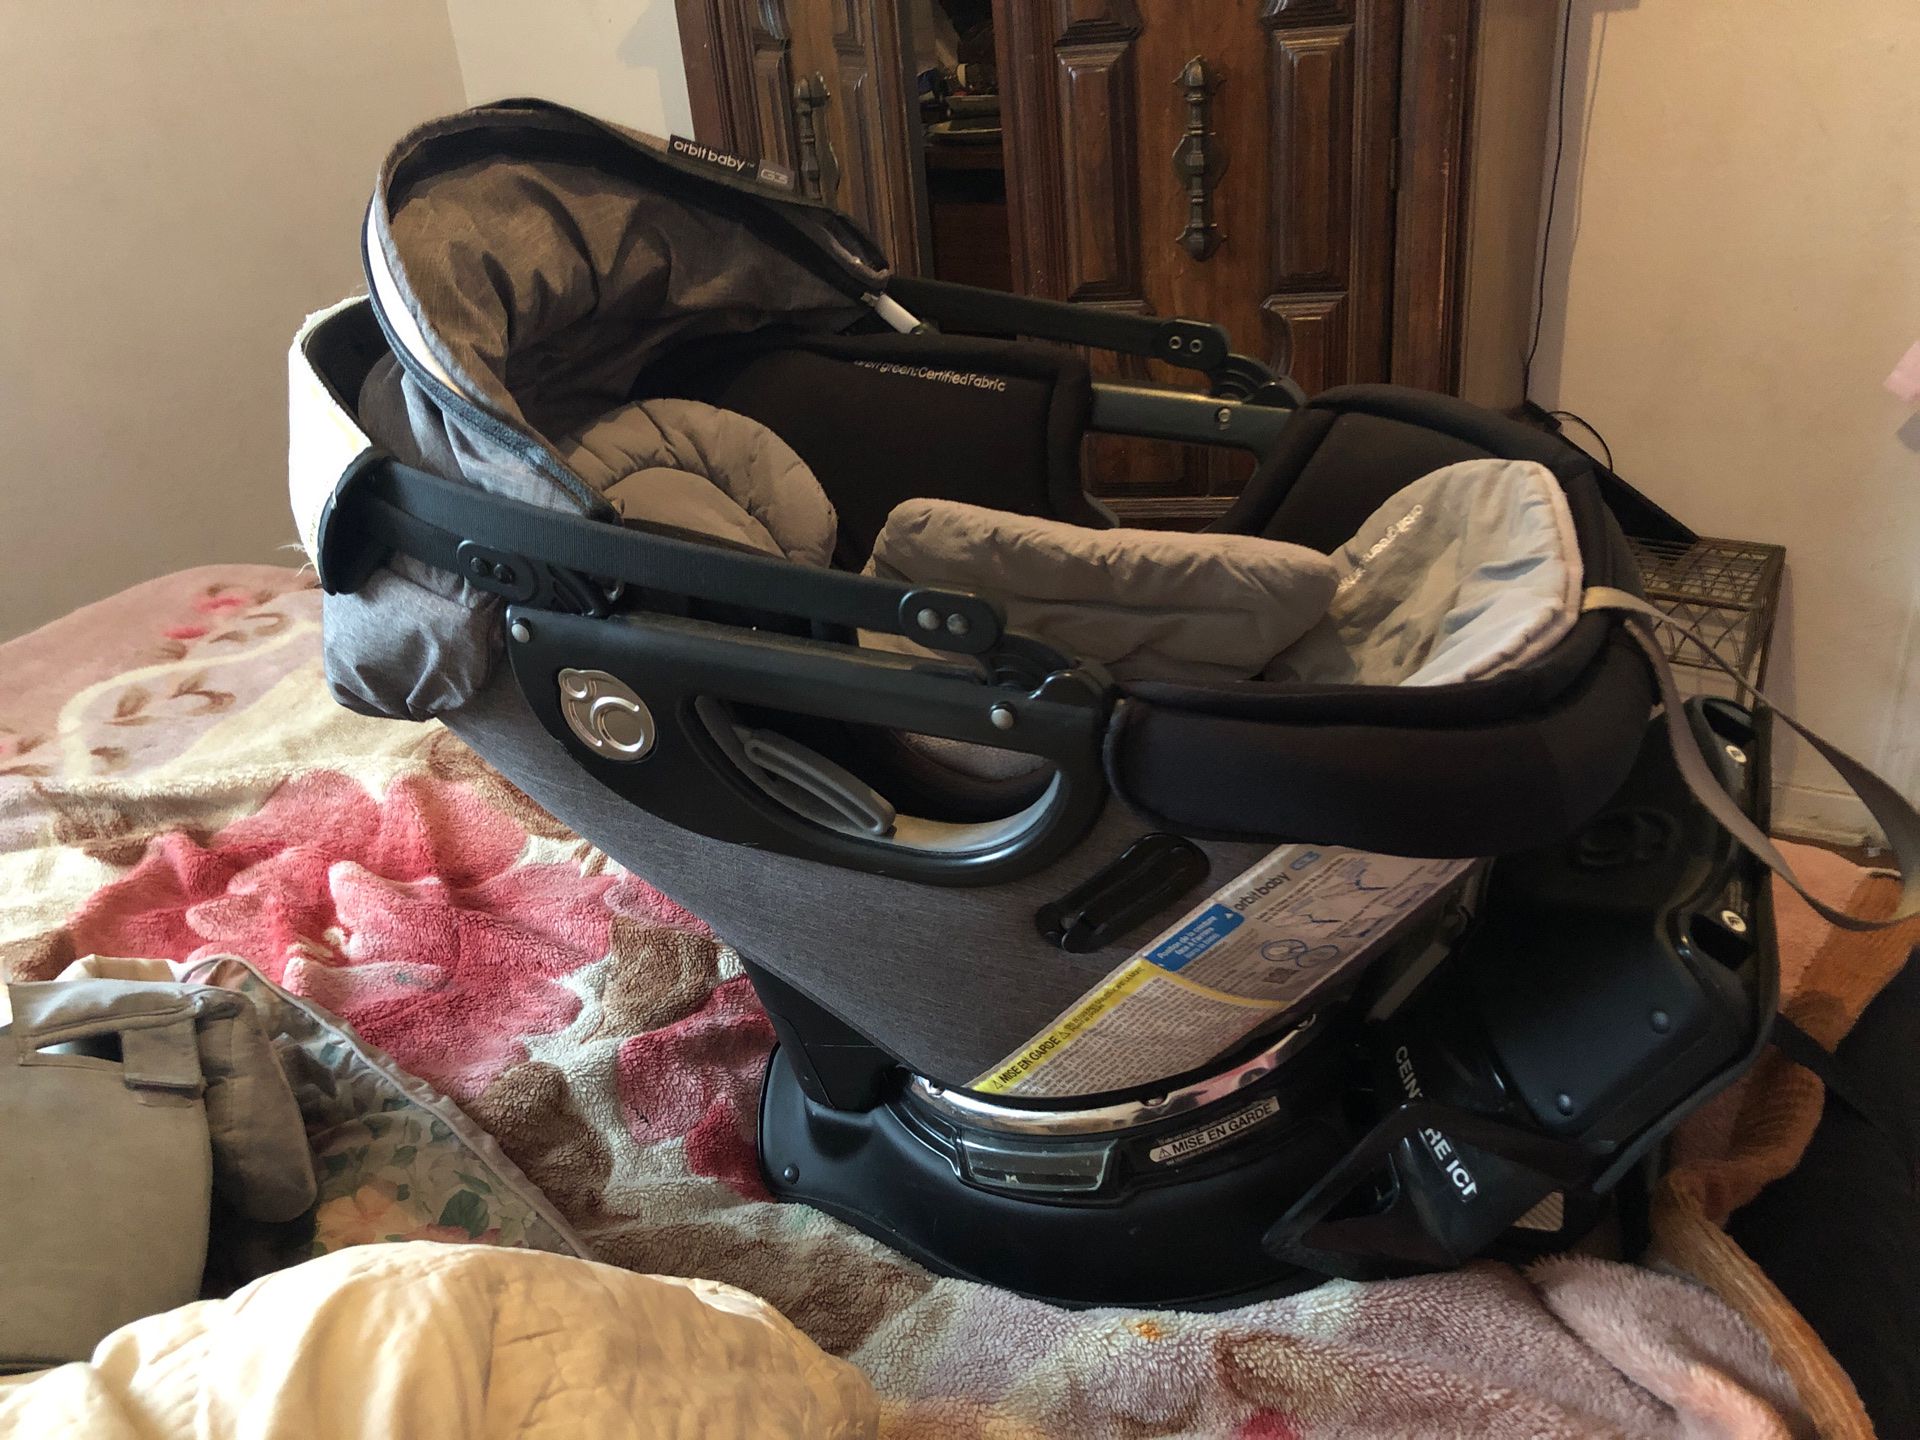 Orbit g3 infant car seat gray $75 obo